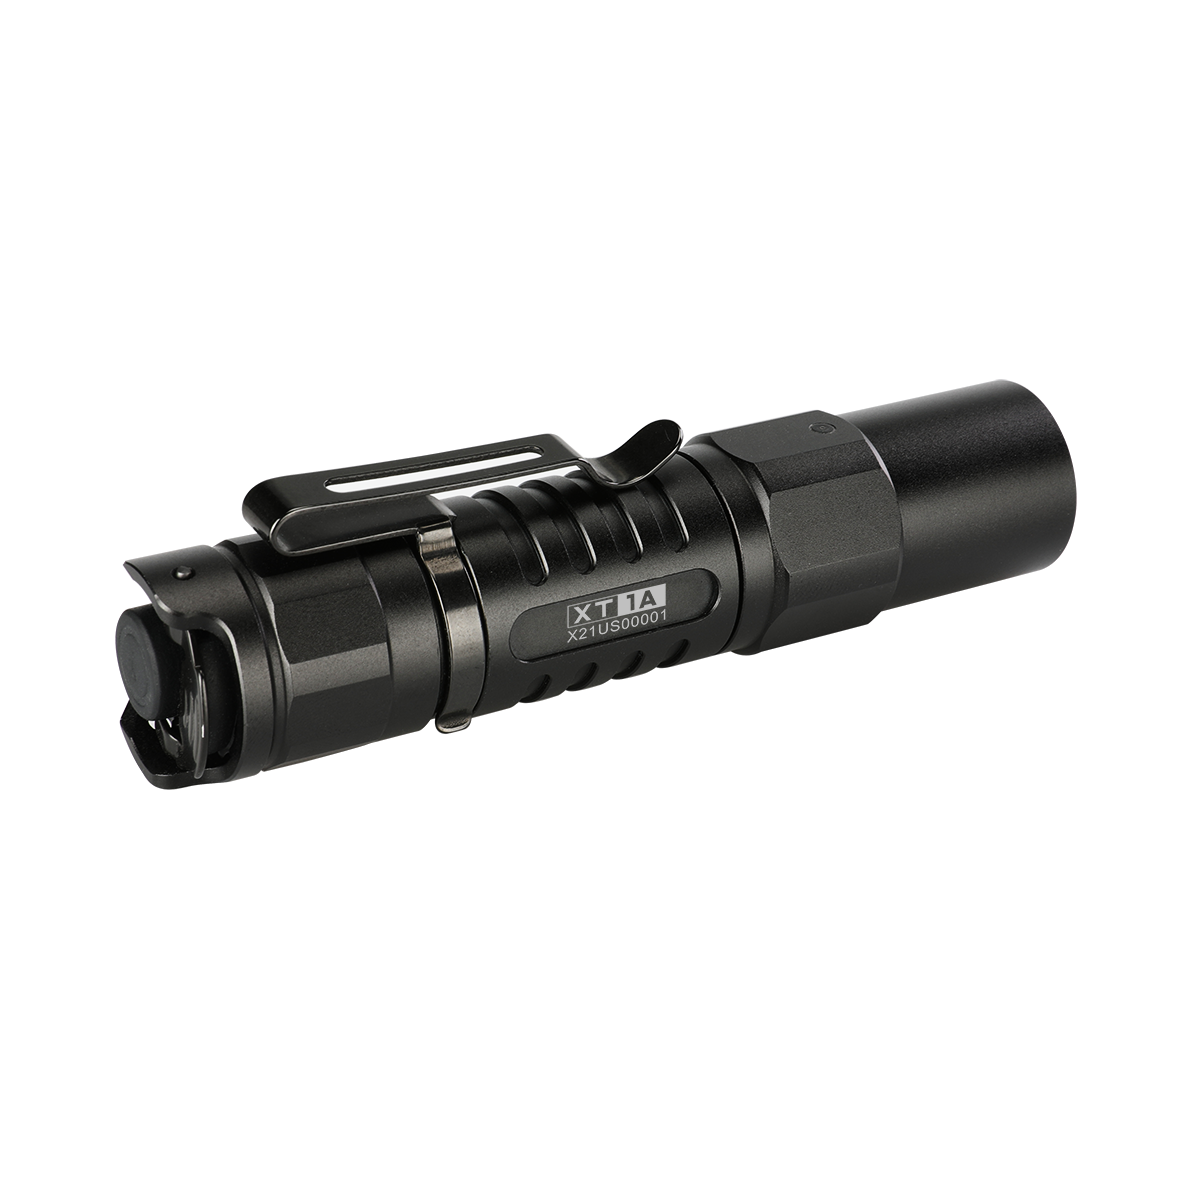 Klarus XT1A 1000 Lumens Dual-Switch  XP-L HD v6 EDC Tactical Flashlight